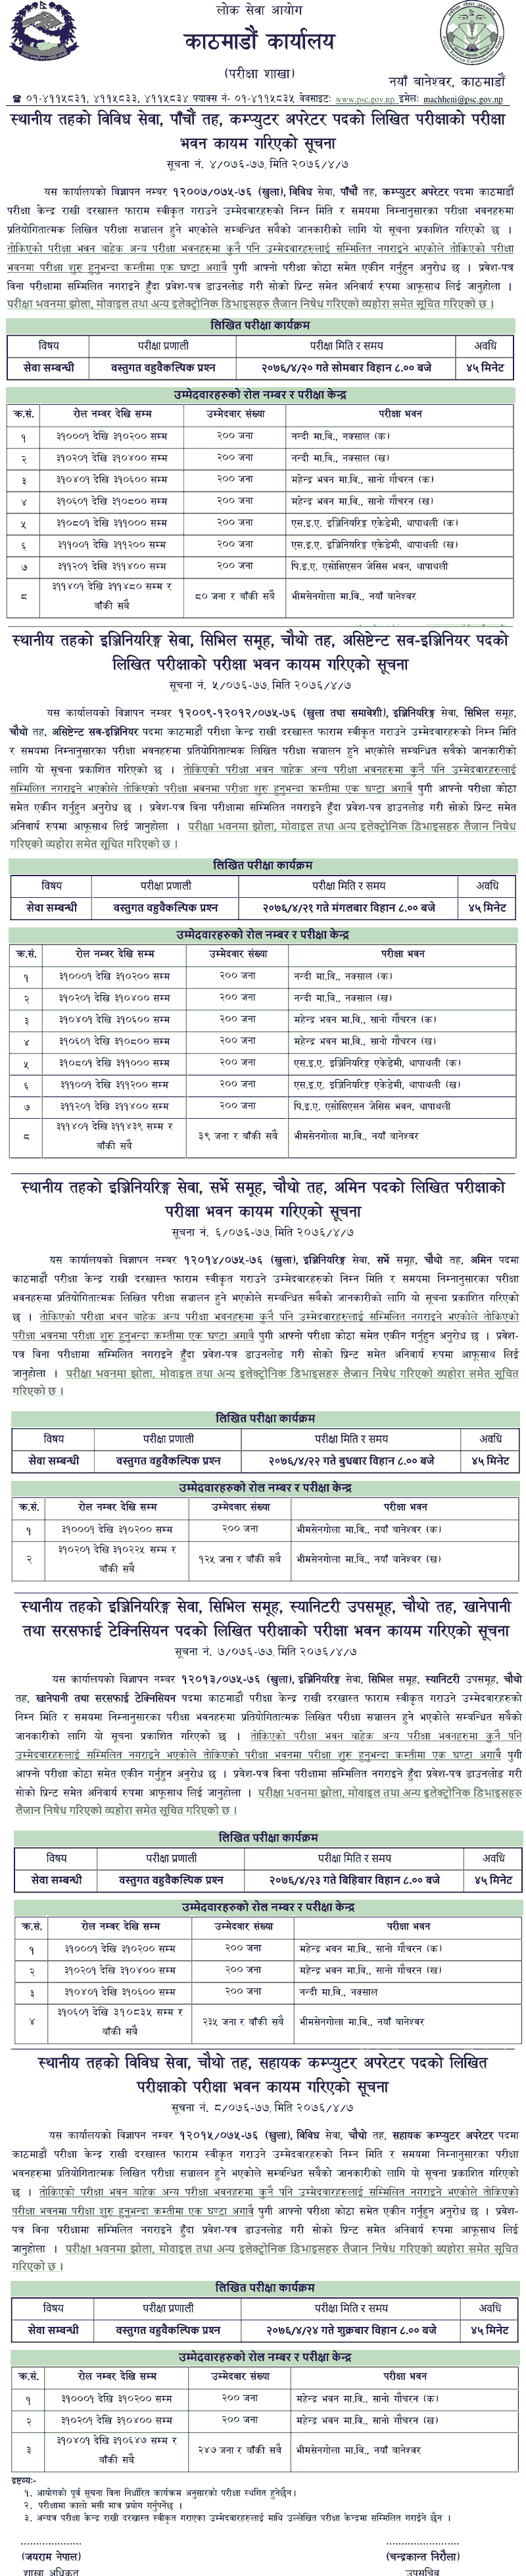 Local Level 4th and 5th Level Technical Written Exam Center - Kathmandu